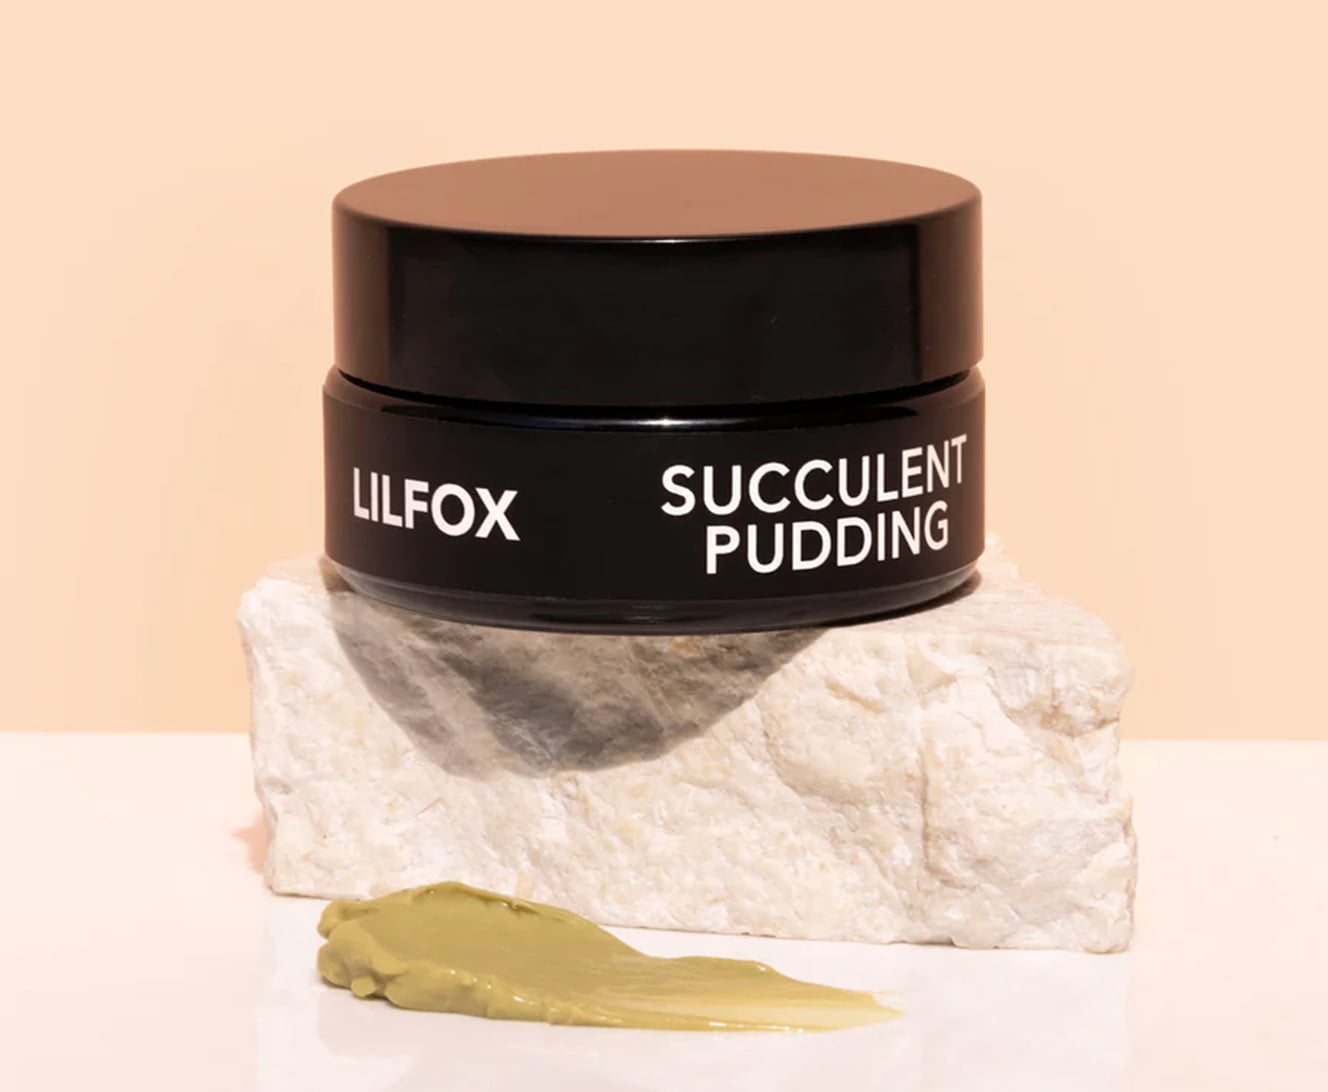 LILFOX Succulent Pudding